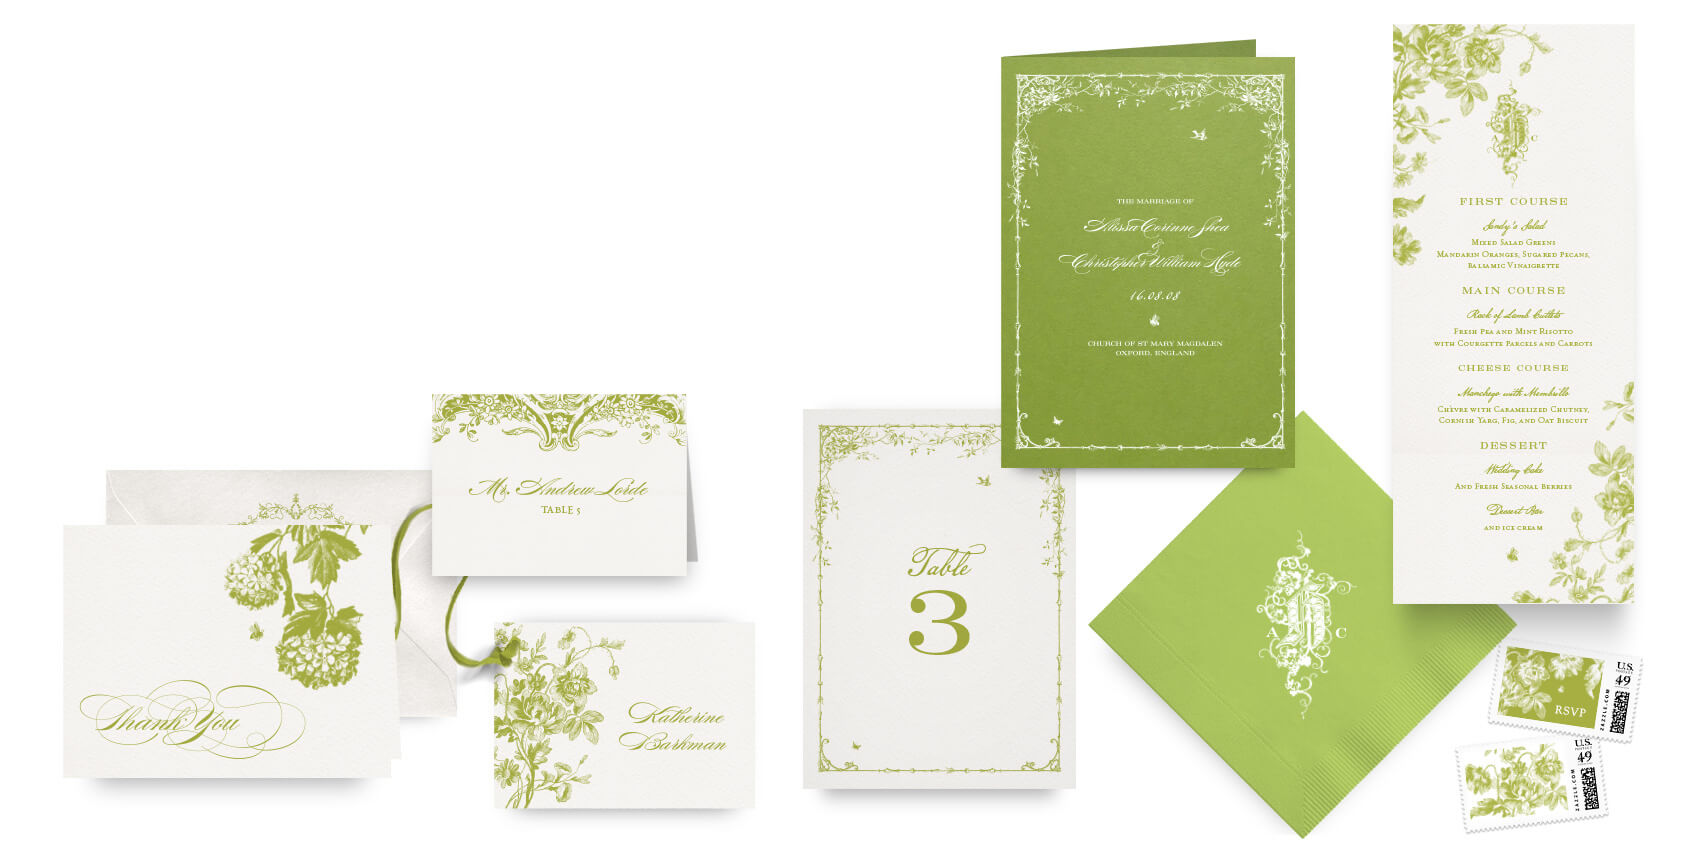 Botanical garden menus, programs and wedding accessories